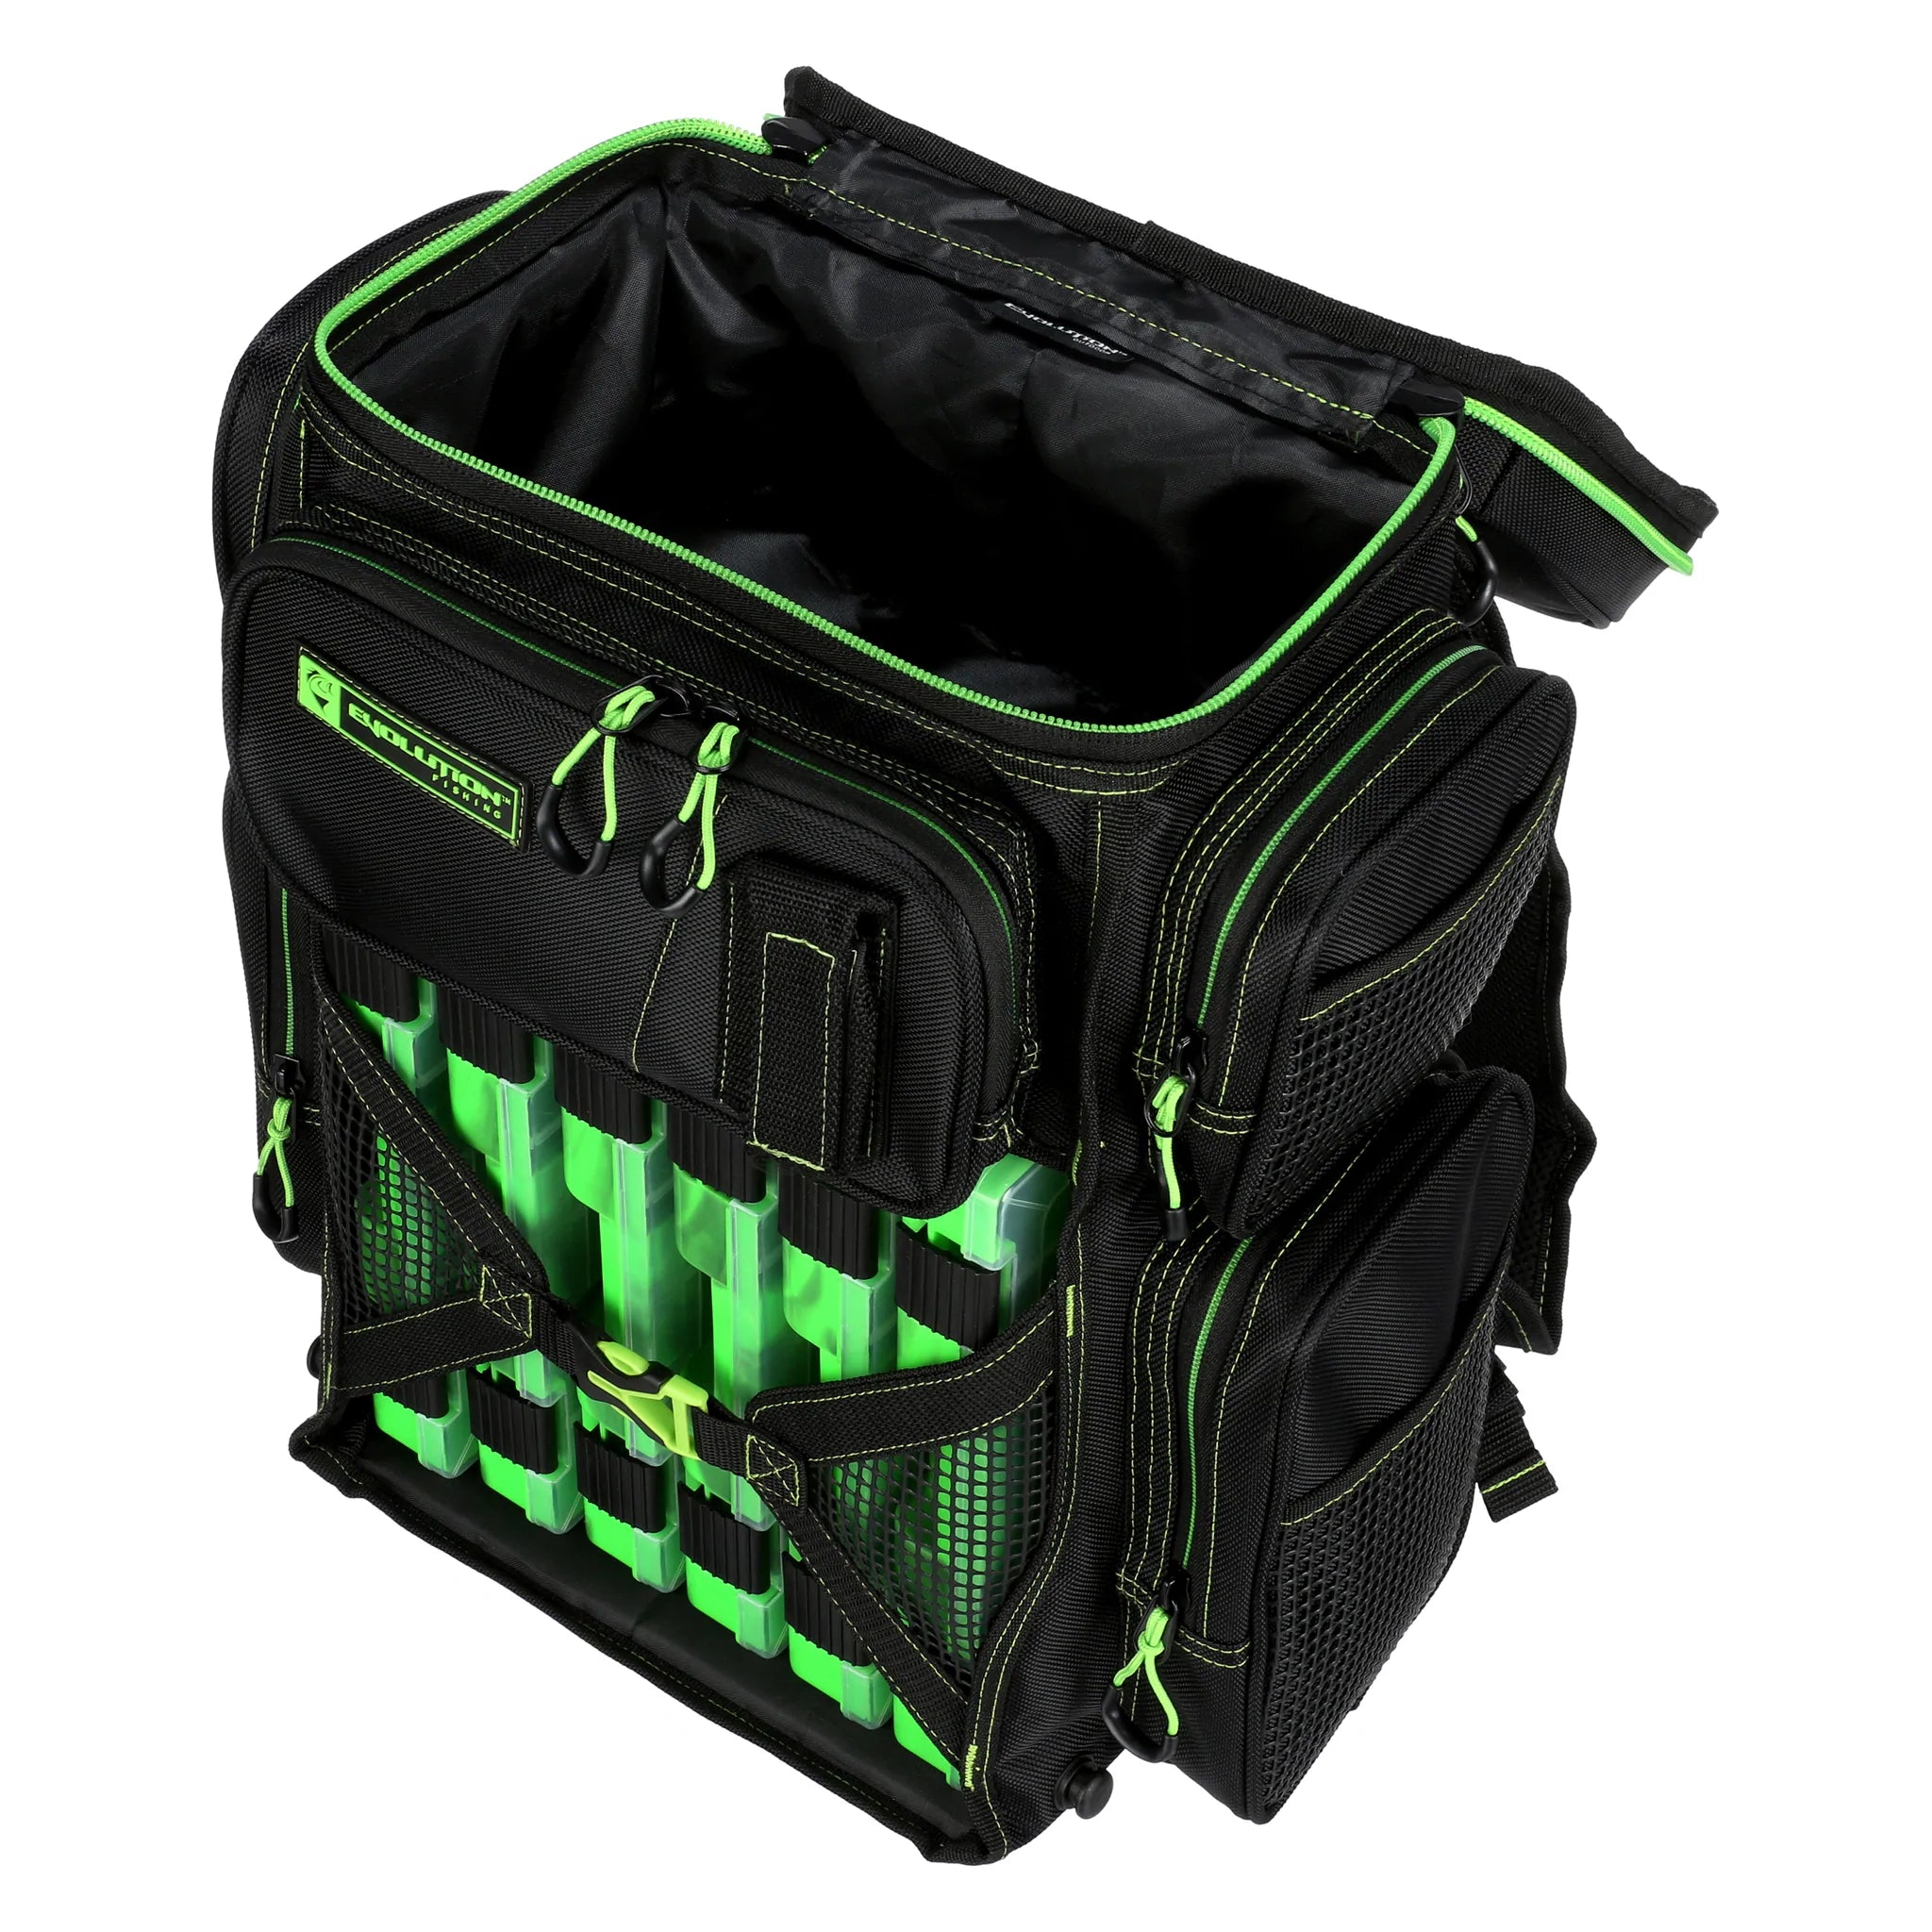 The Evolution Fishing 3700 Drift Backpack is the best option for